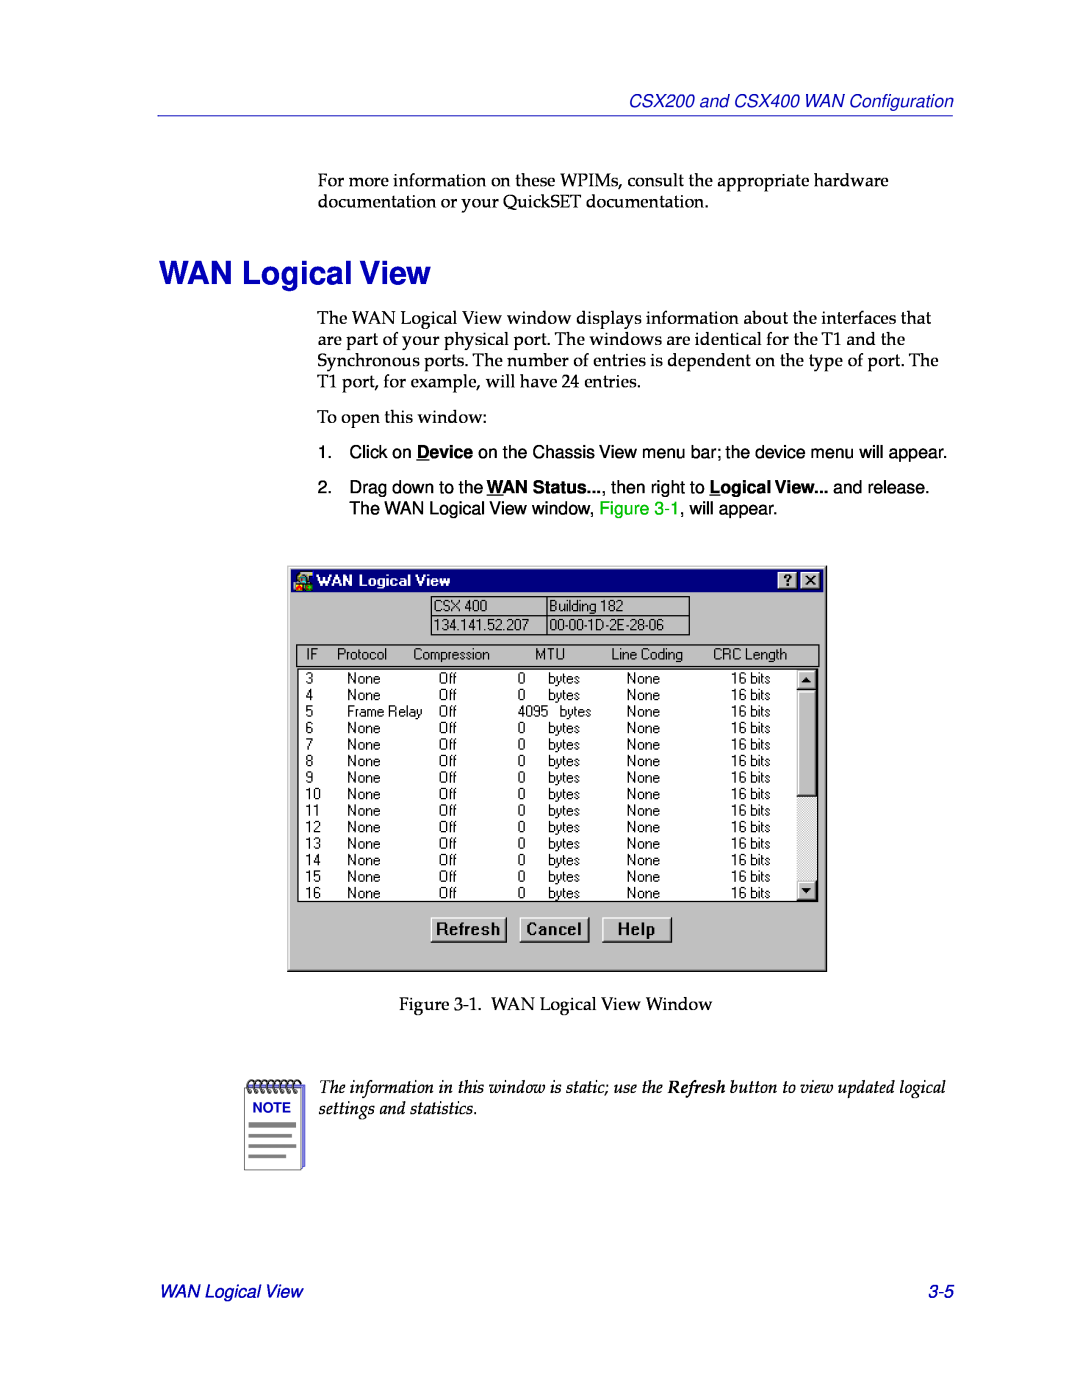 Cabletron Systems manual WAN Logical View, CSX200 and CSX400 WAN Conﬁguration 